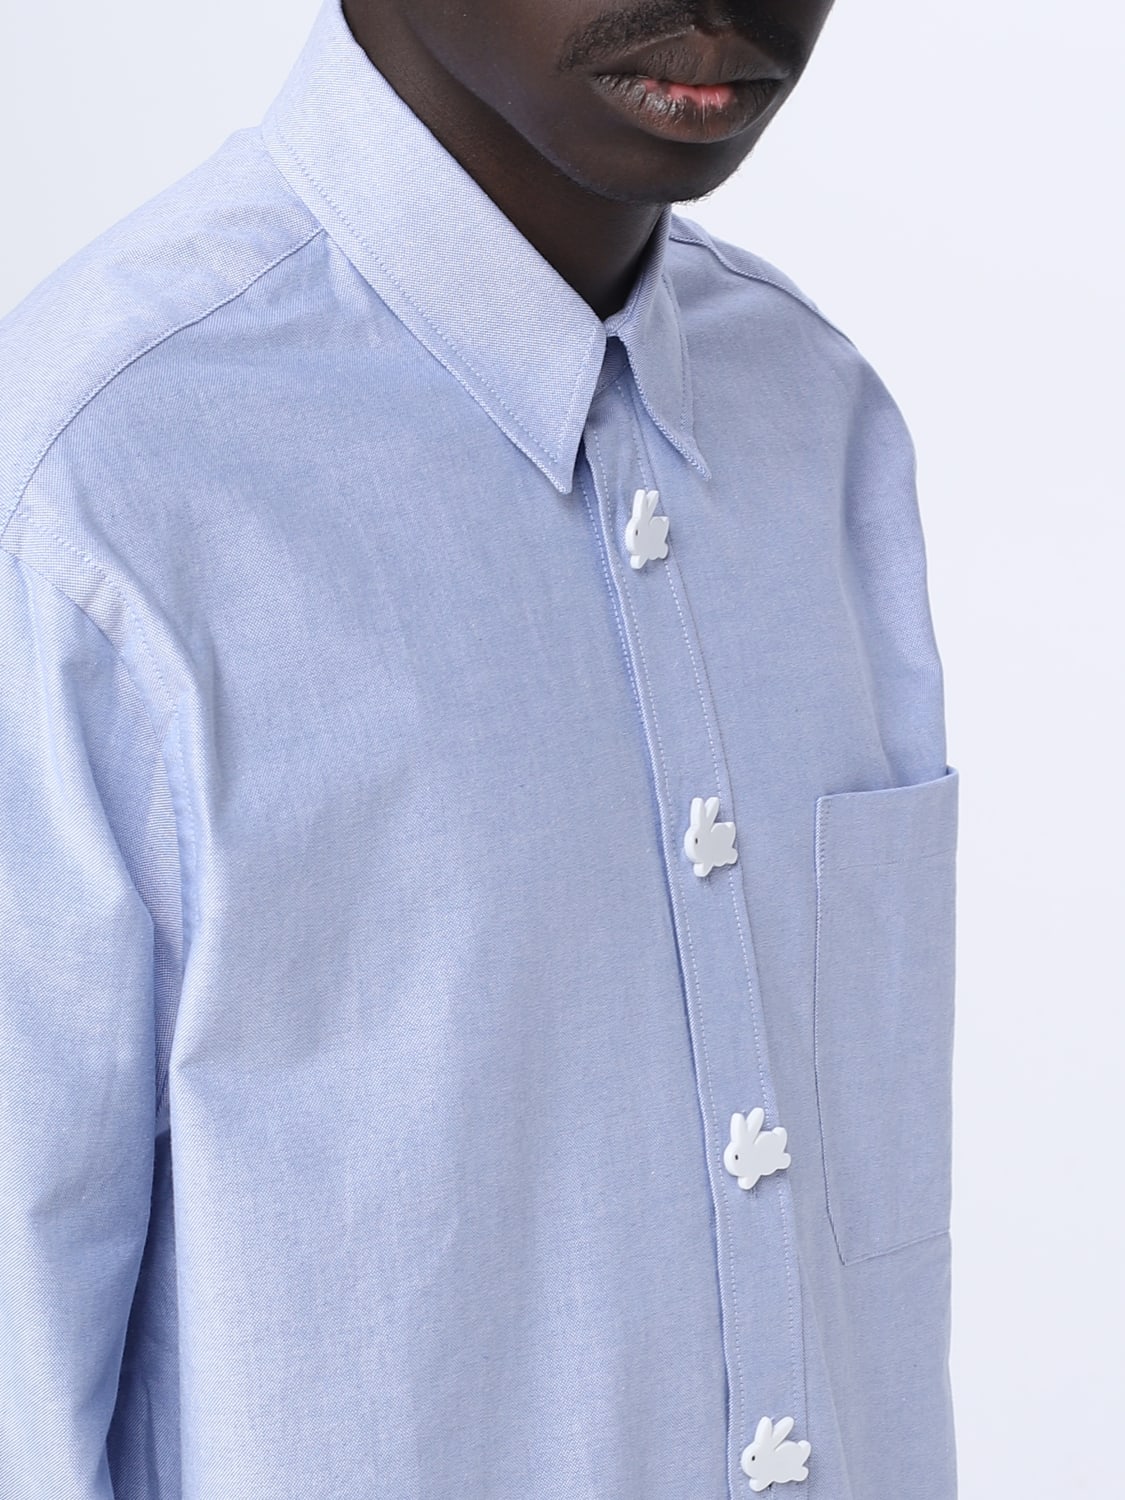 JW ANDERSON: shirt for man - Blue | Jw Anderson shirt SH0248PG1140 ...